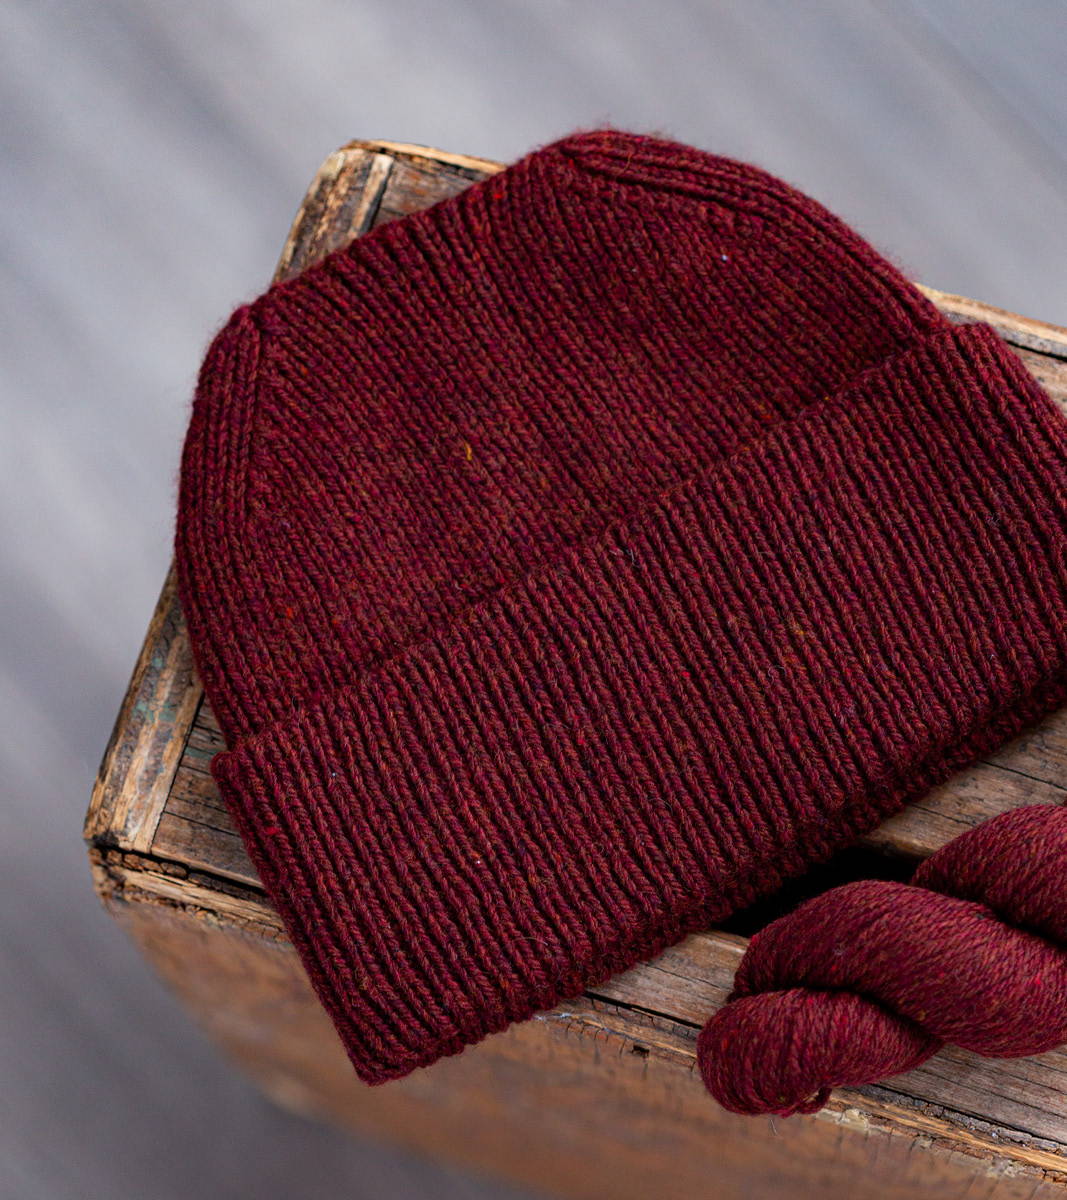 Brooklyn Tweed's Hansmire Hat hand knit in Imbue Sport yarn color Cloak.